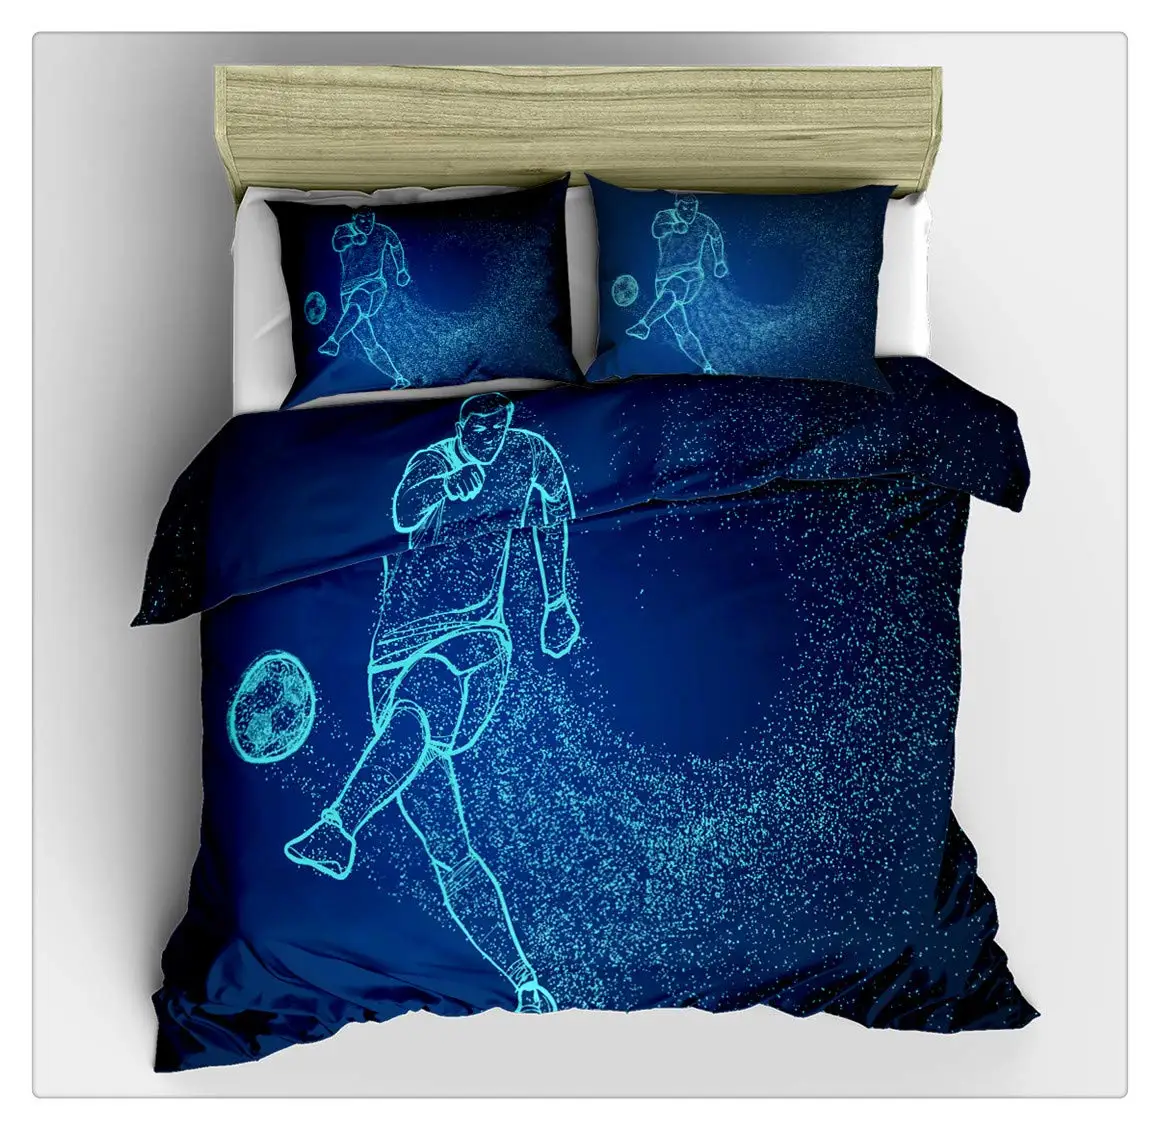 

3 Piece Sports Soccer Bedding Set for Teen Boys Duvet Cover Sets with Pillowcases 1 Duvet Cover+2 Pillow Shams